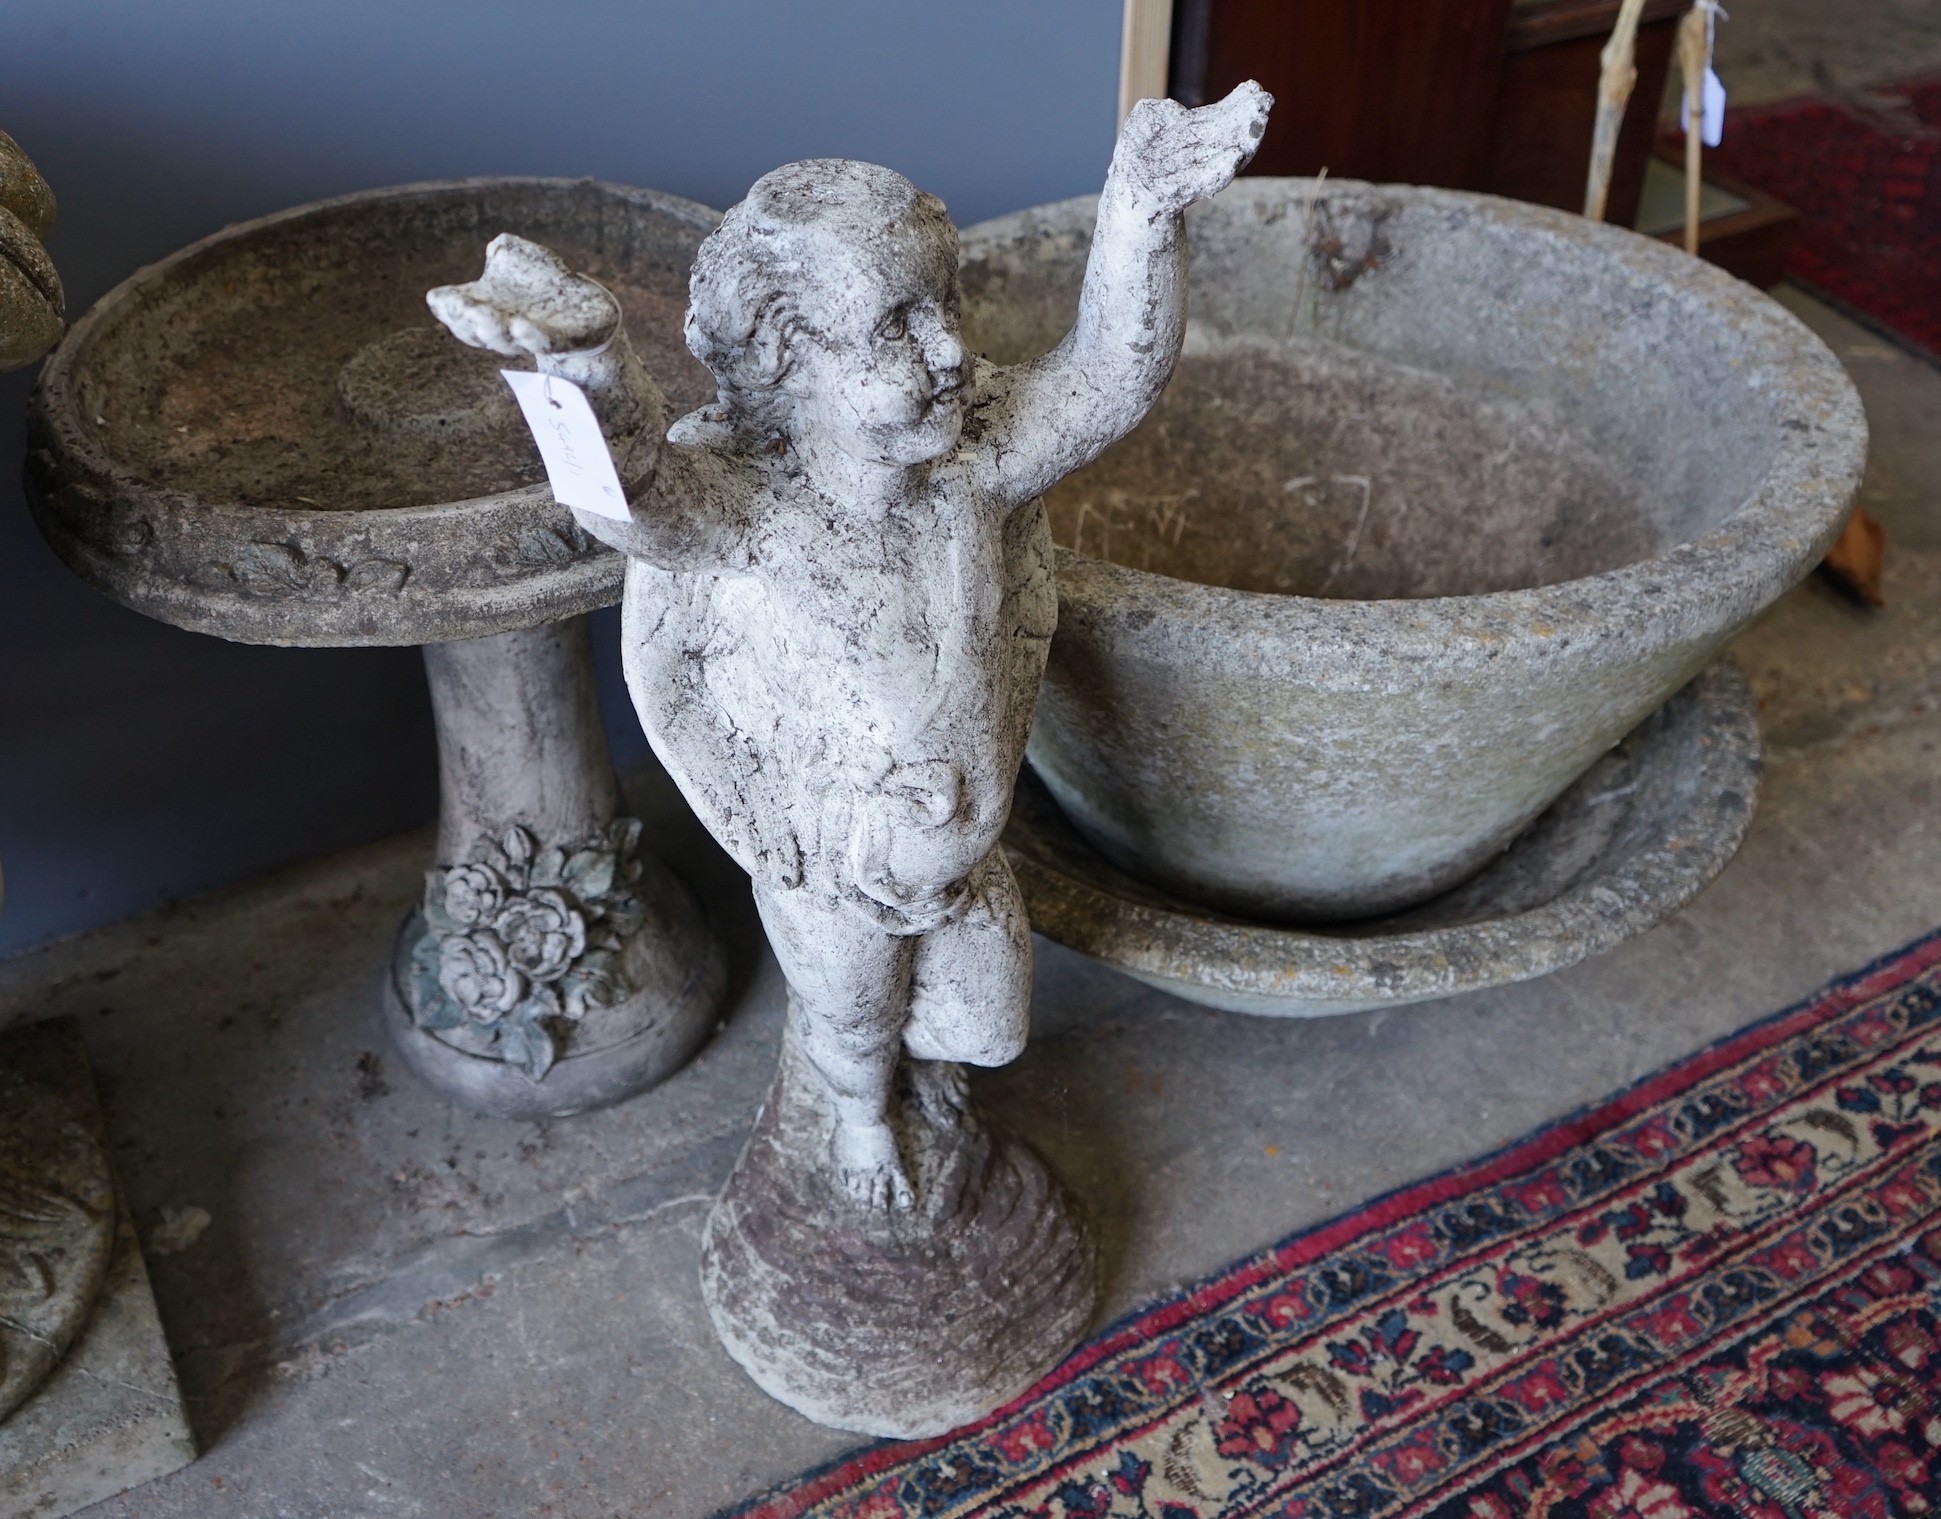 A circular reconstituted stone bird bath, height 50cm, a pair of circular planters and a cherub ornament